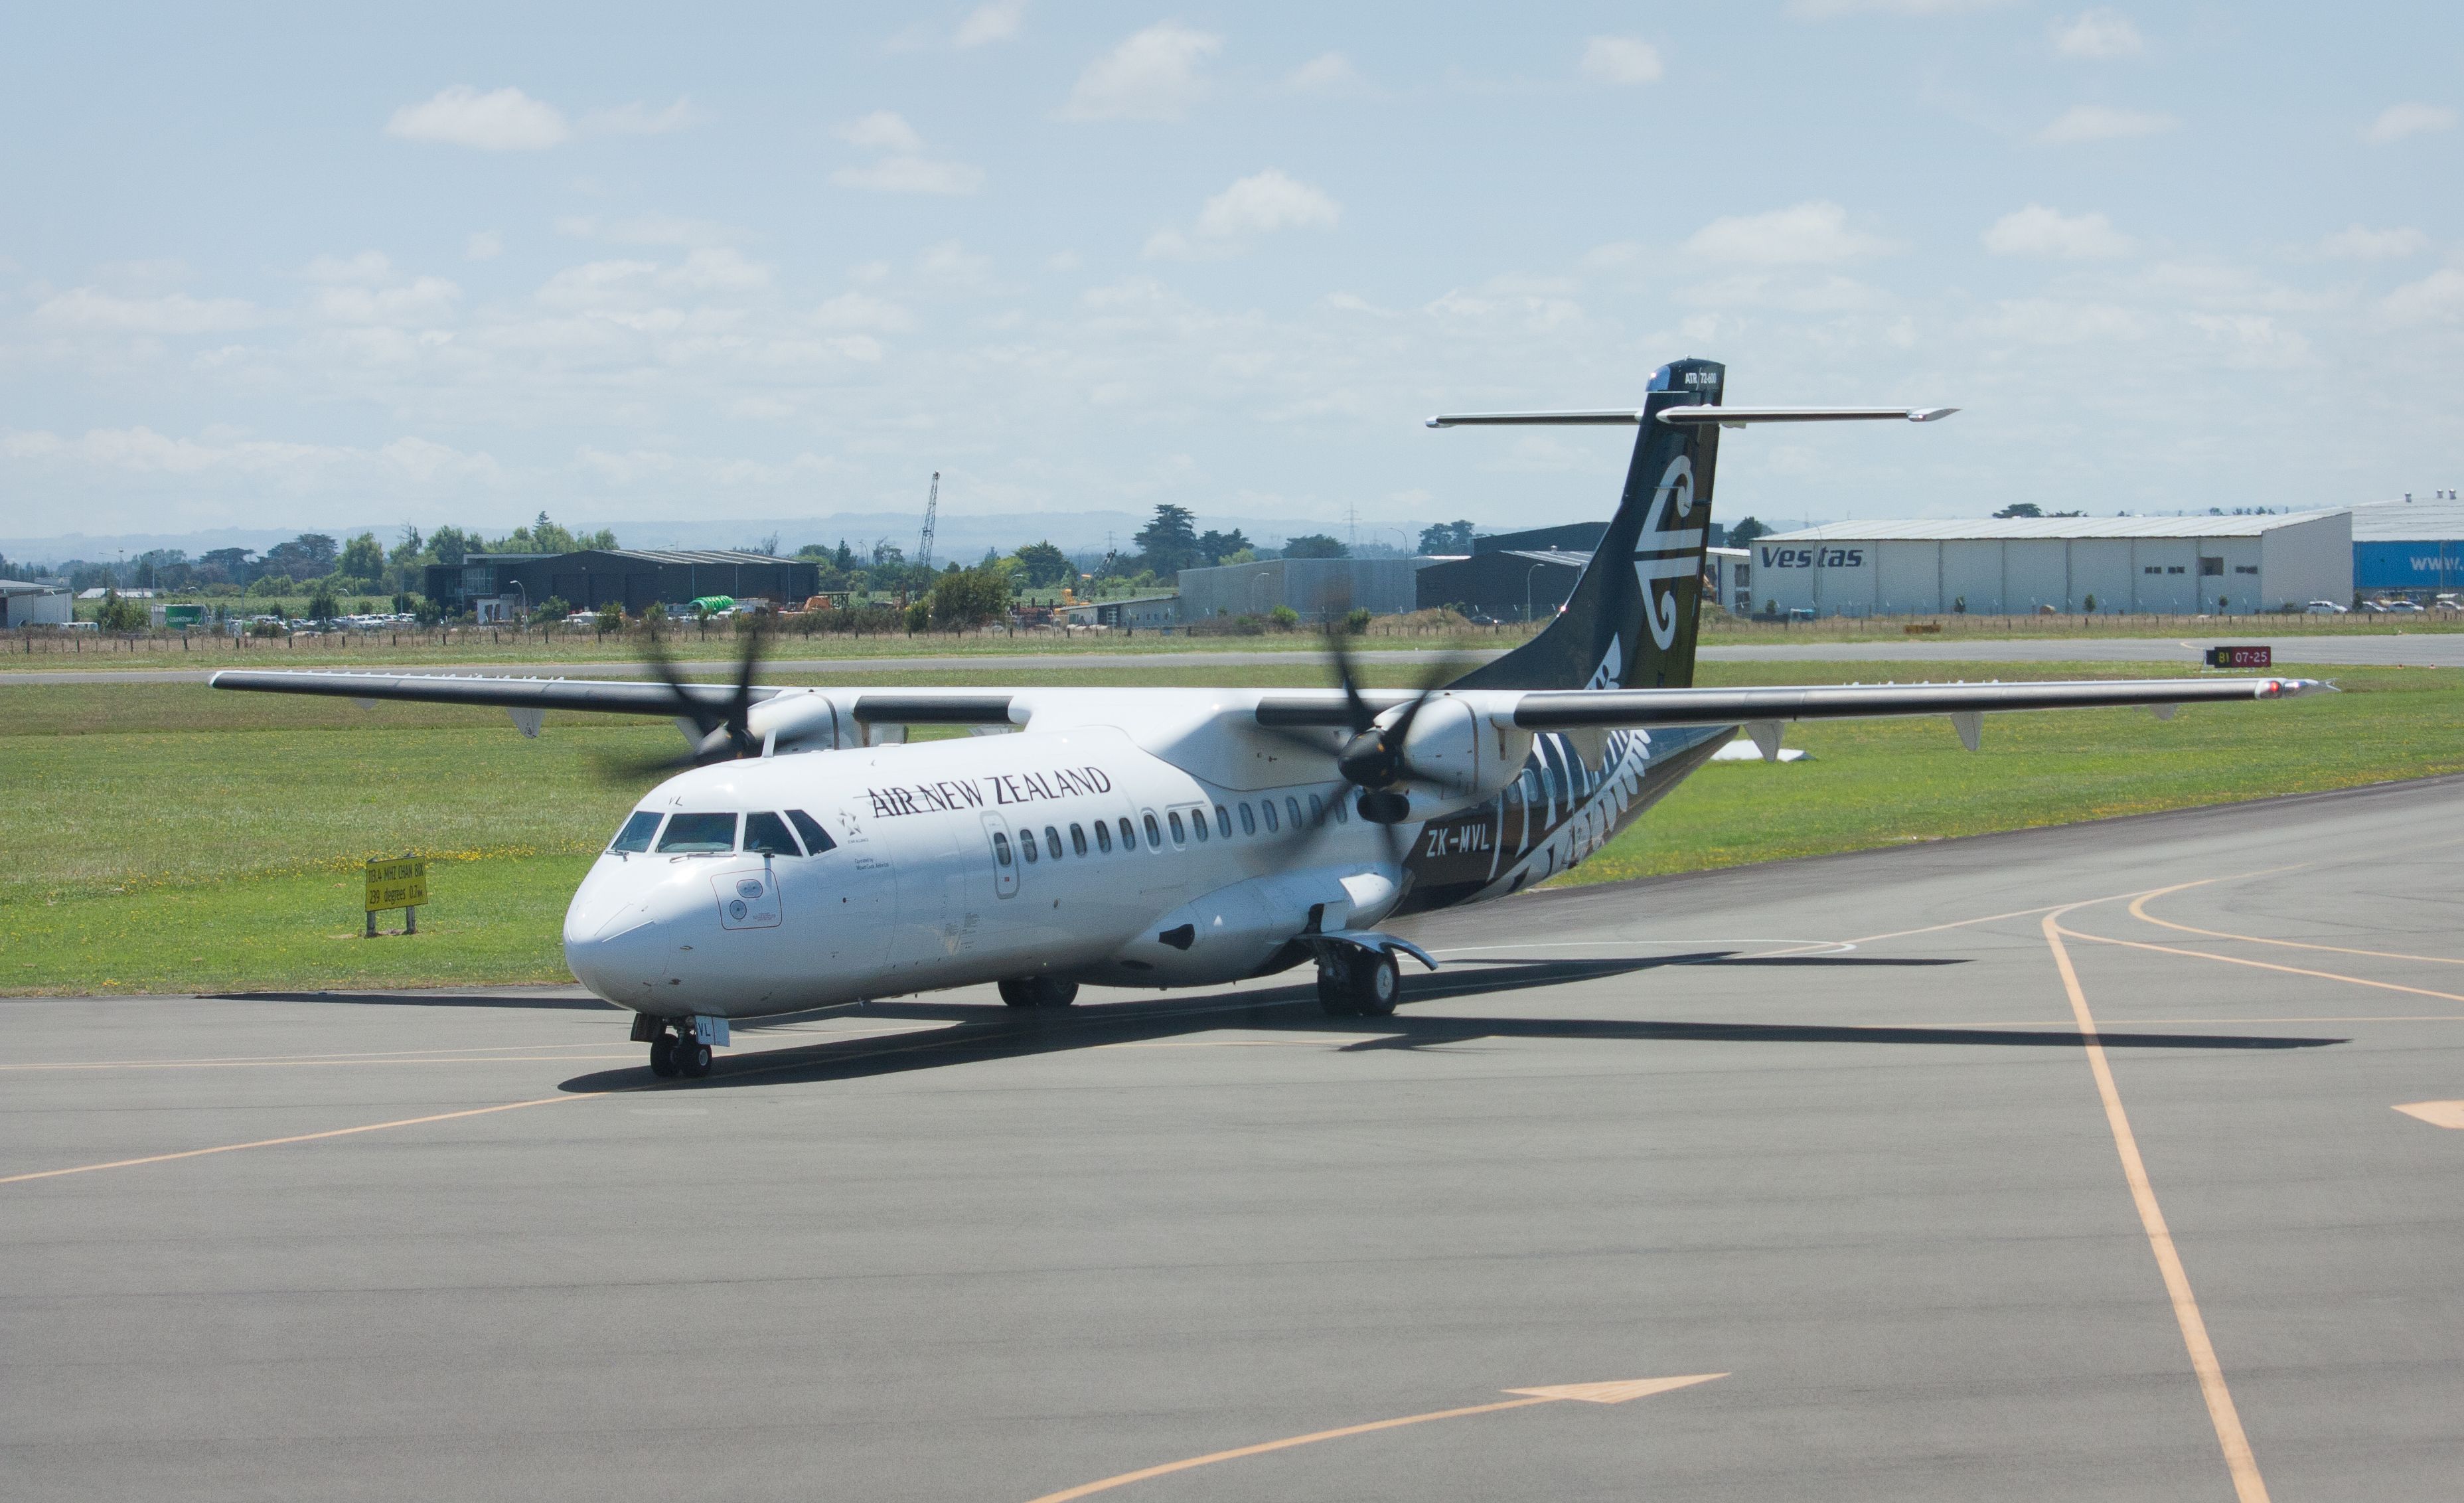 Air New Zealand aircraft after landing at Palmerston North airport. ATR72